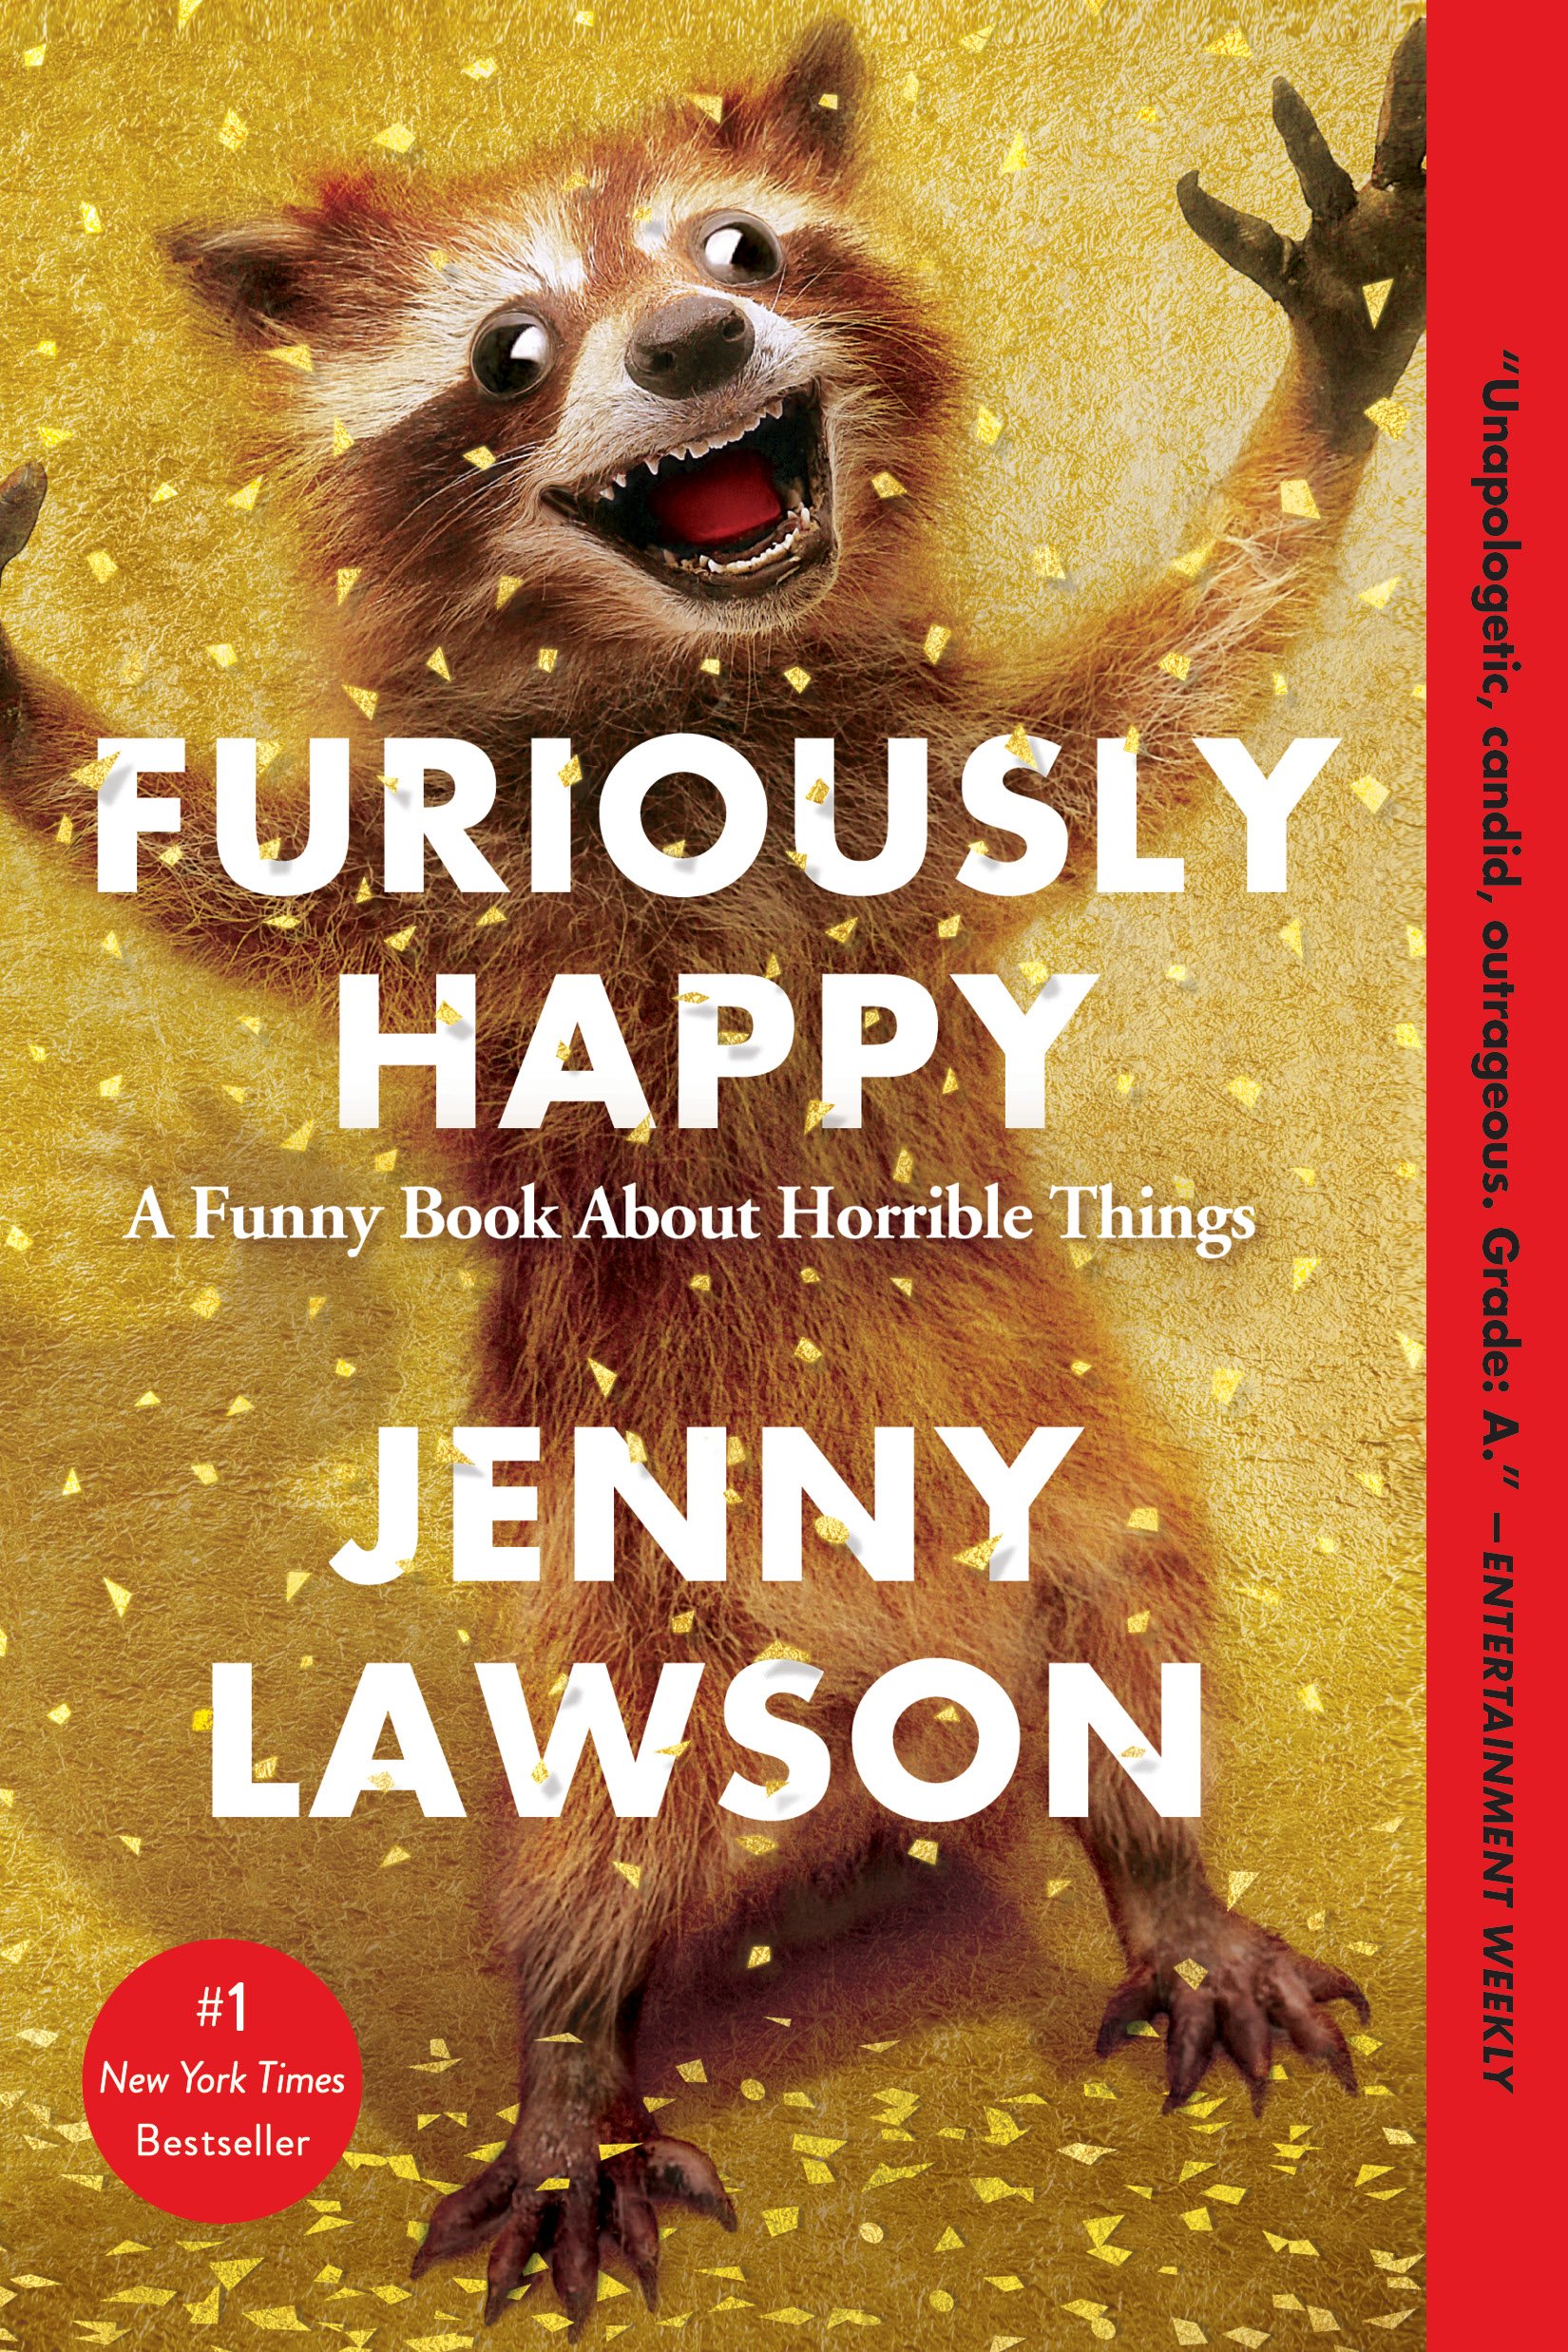 'Furiously Happy' by Jenny Lawson